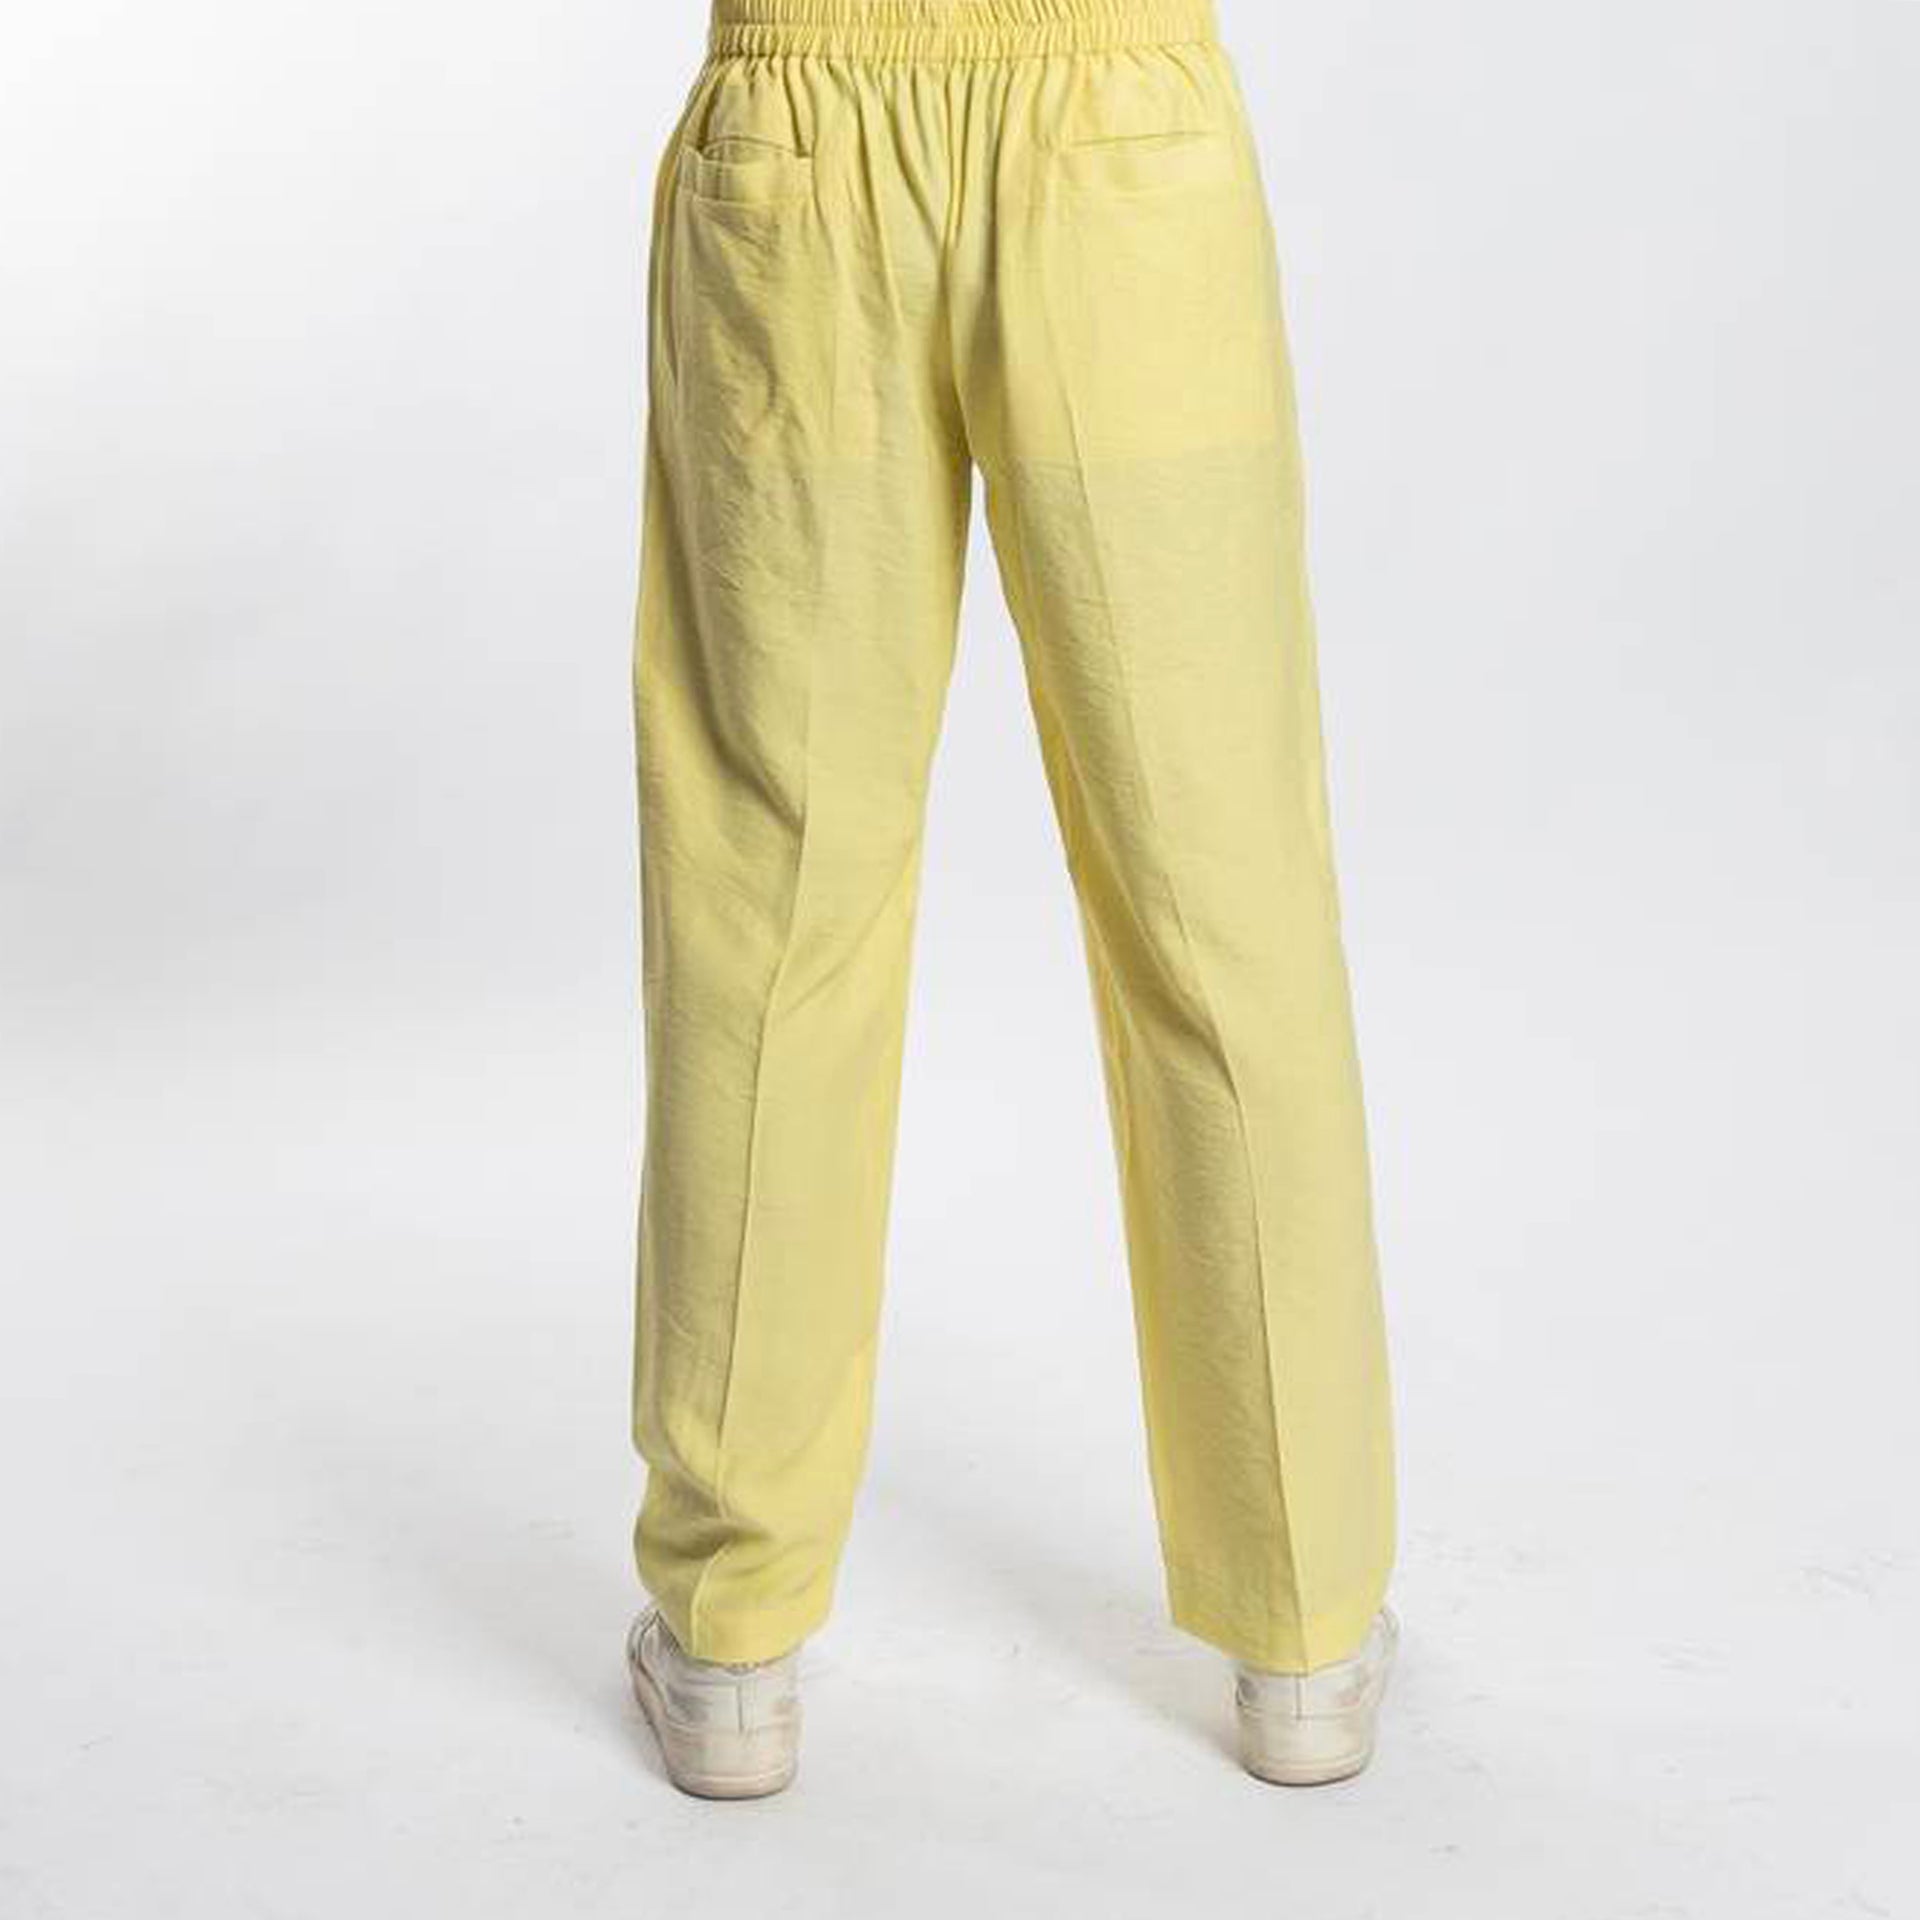 Light Yellow Linen Pants From Hajruss